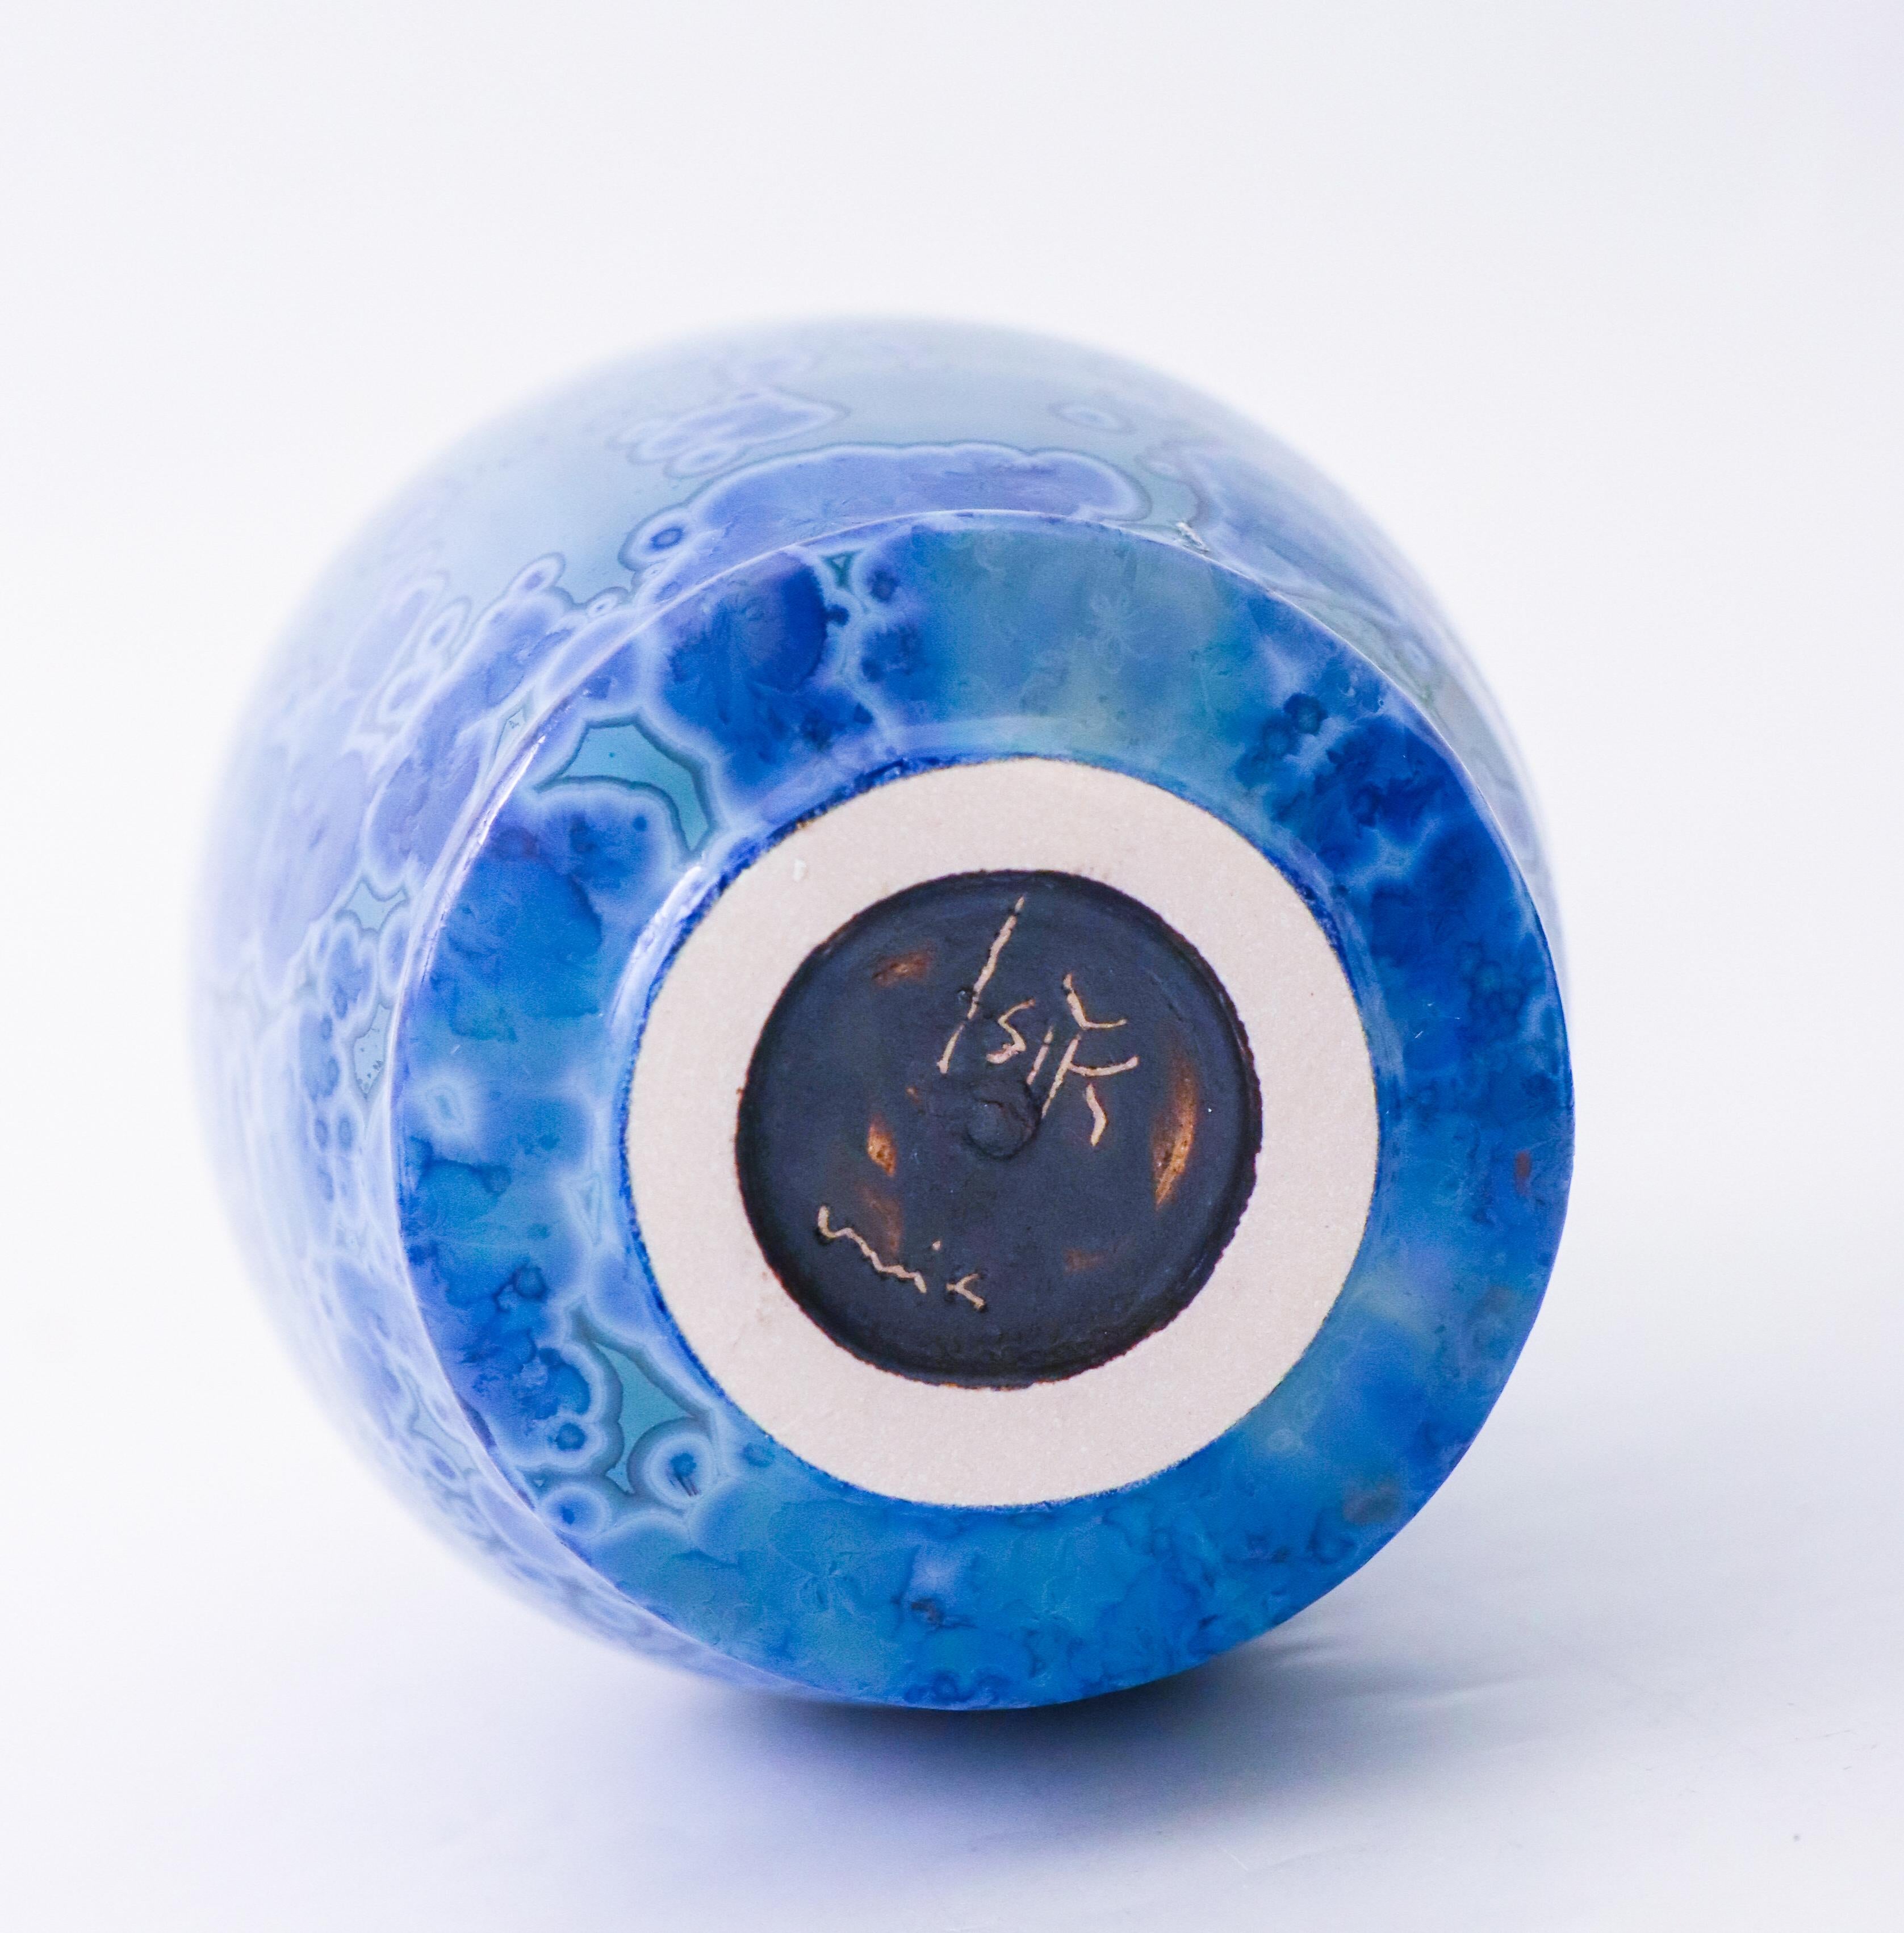 Glazed Isak Isaksson Blue Ceramic Vase Crystalline Glaze Contemporary Artist For Sale